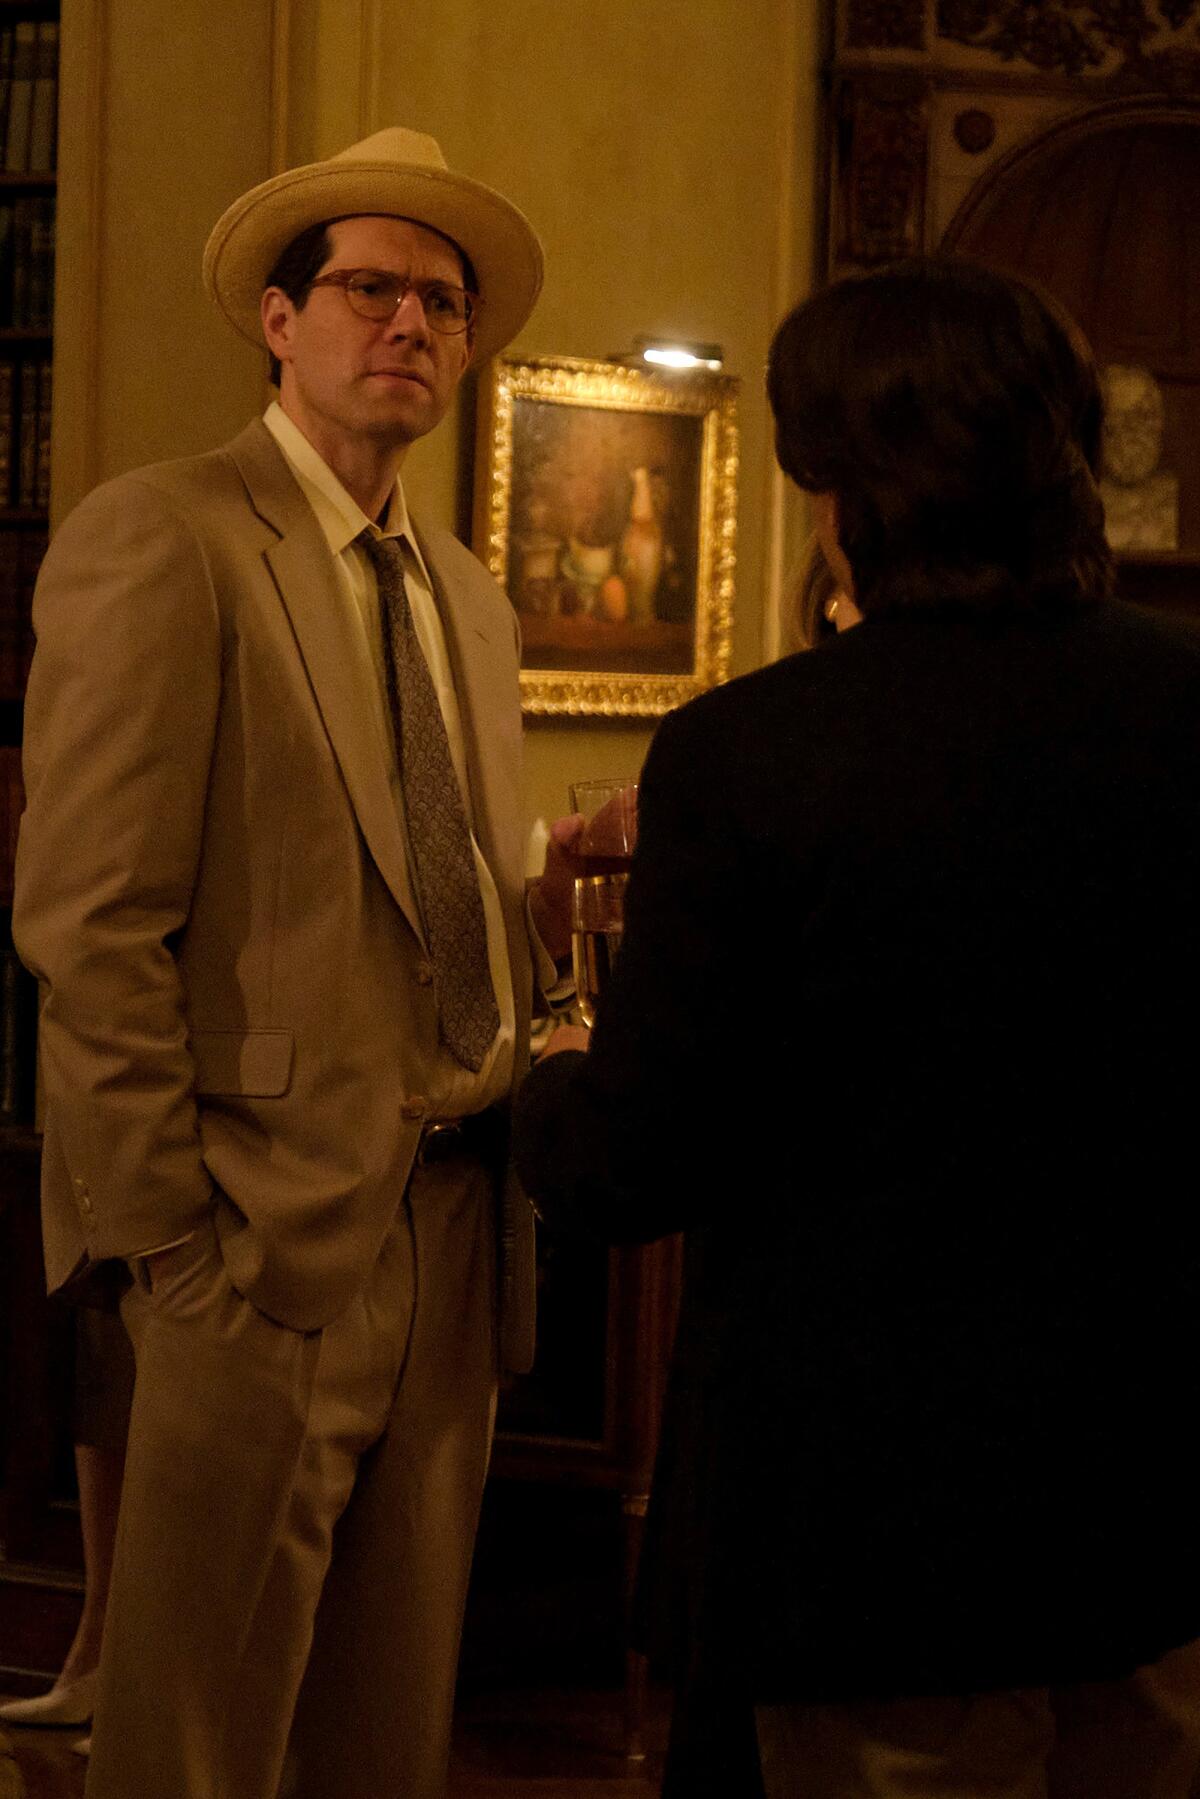 Billy Eichner as the online journalist Matt Drudge, wearing a beige suit and panama hat.